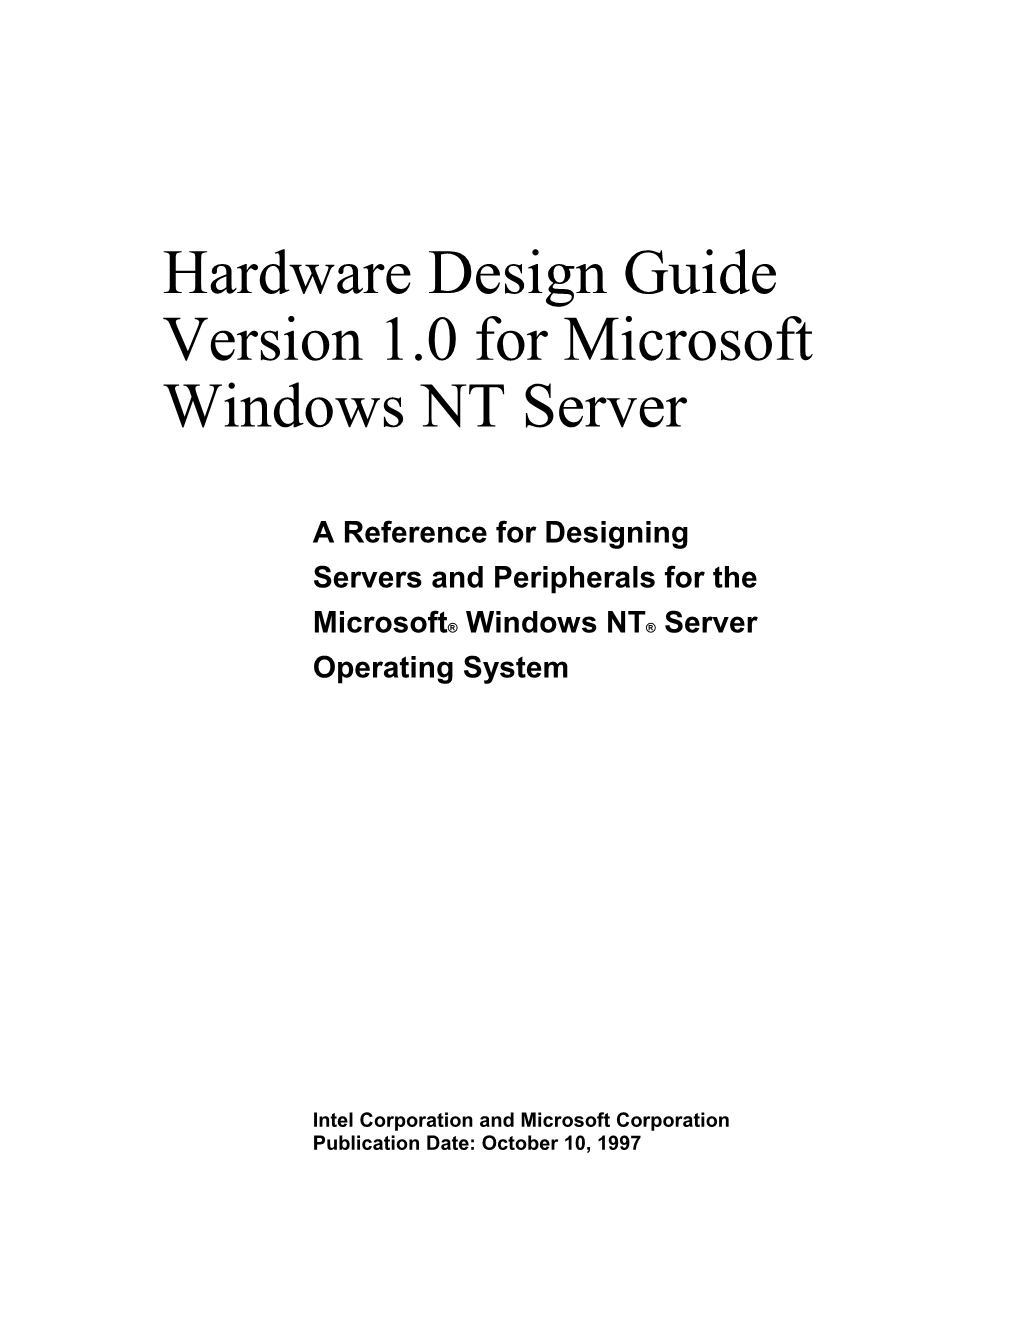 Hardware Design Guide Version 1.0 for Microsoft Windows NT Server